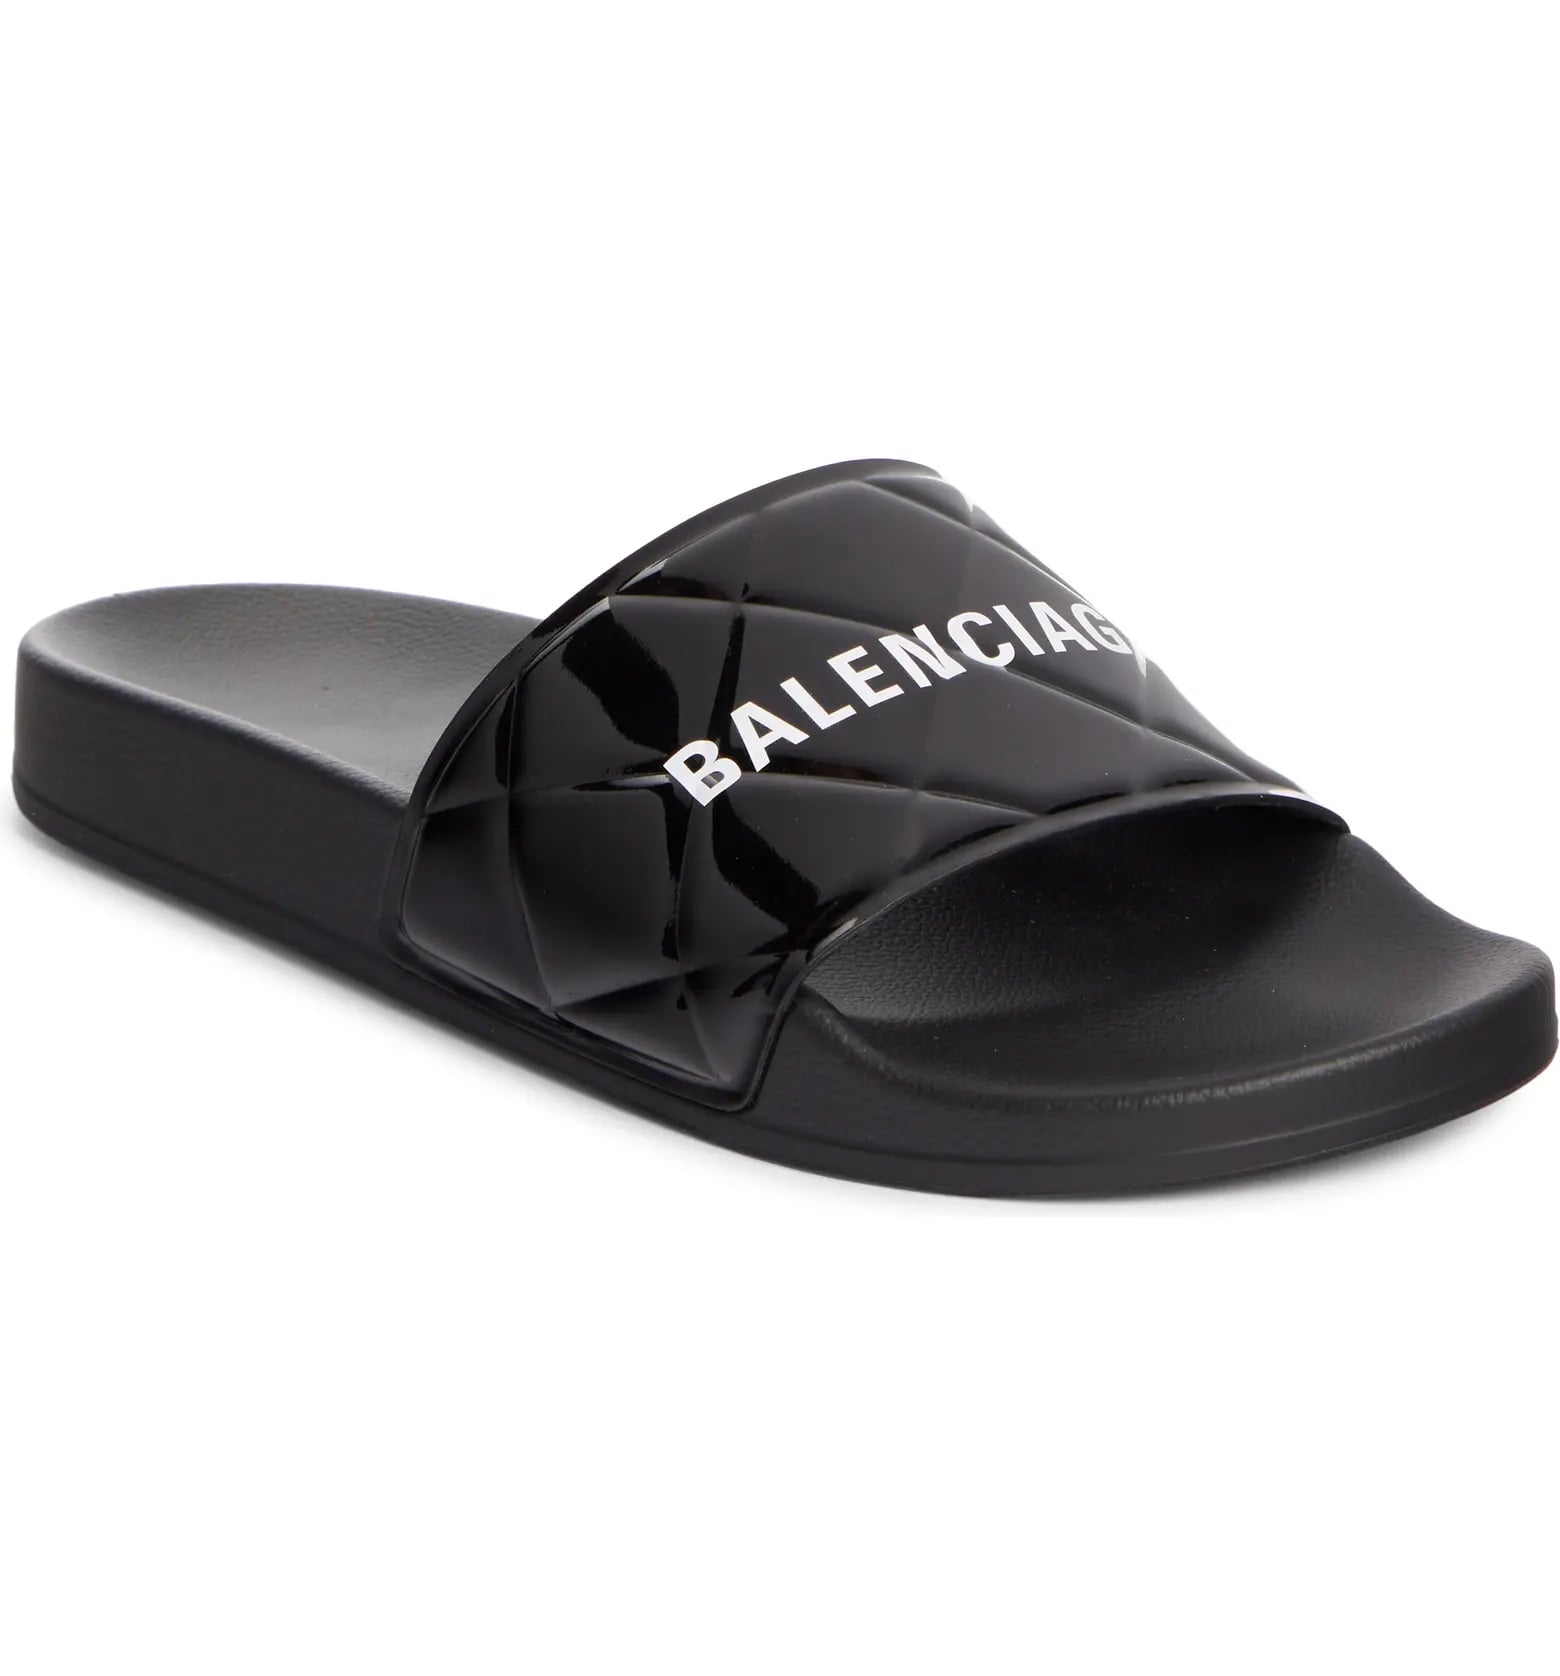 Balenciaga  Shoes  Balenciaga Chunky Platform Slide Sandals Size 35 5 55   Poshmark